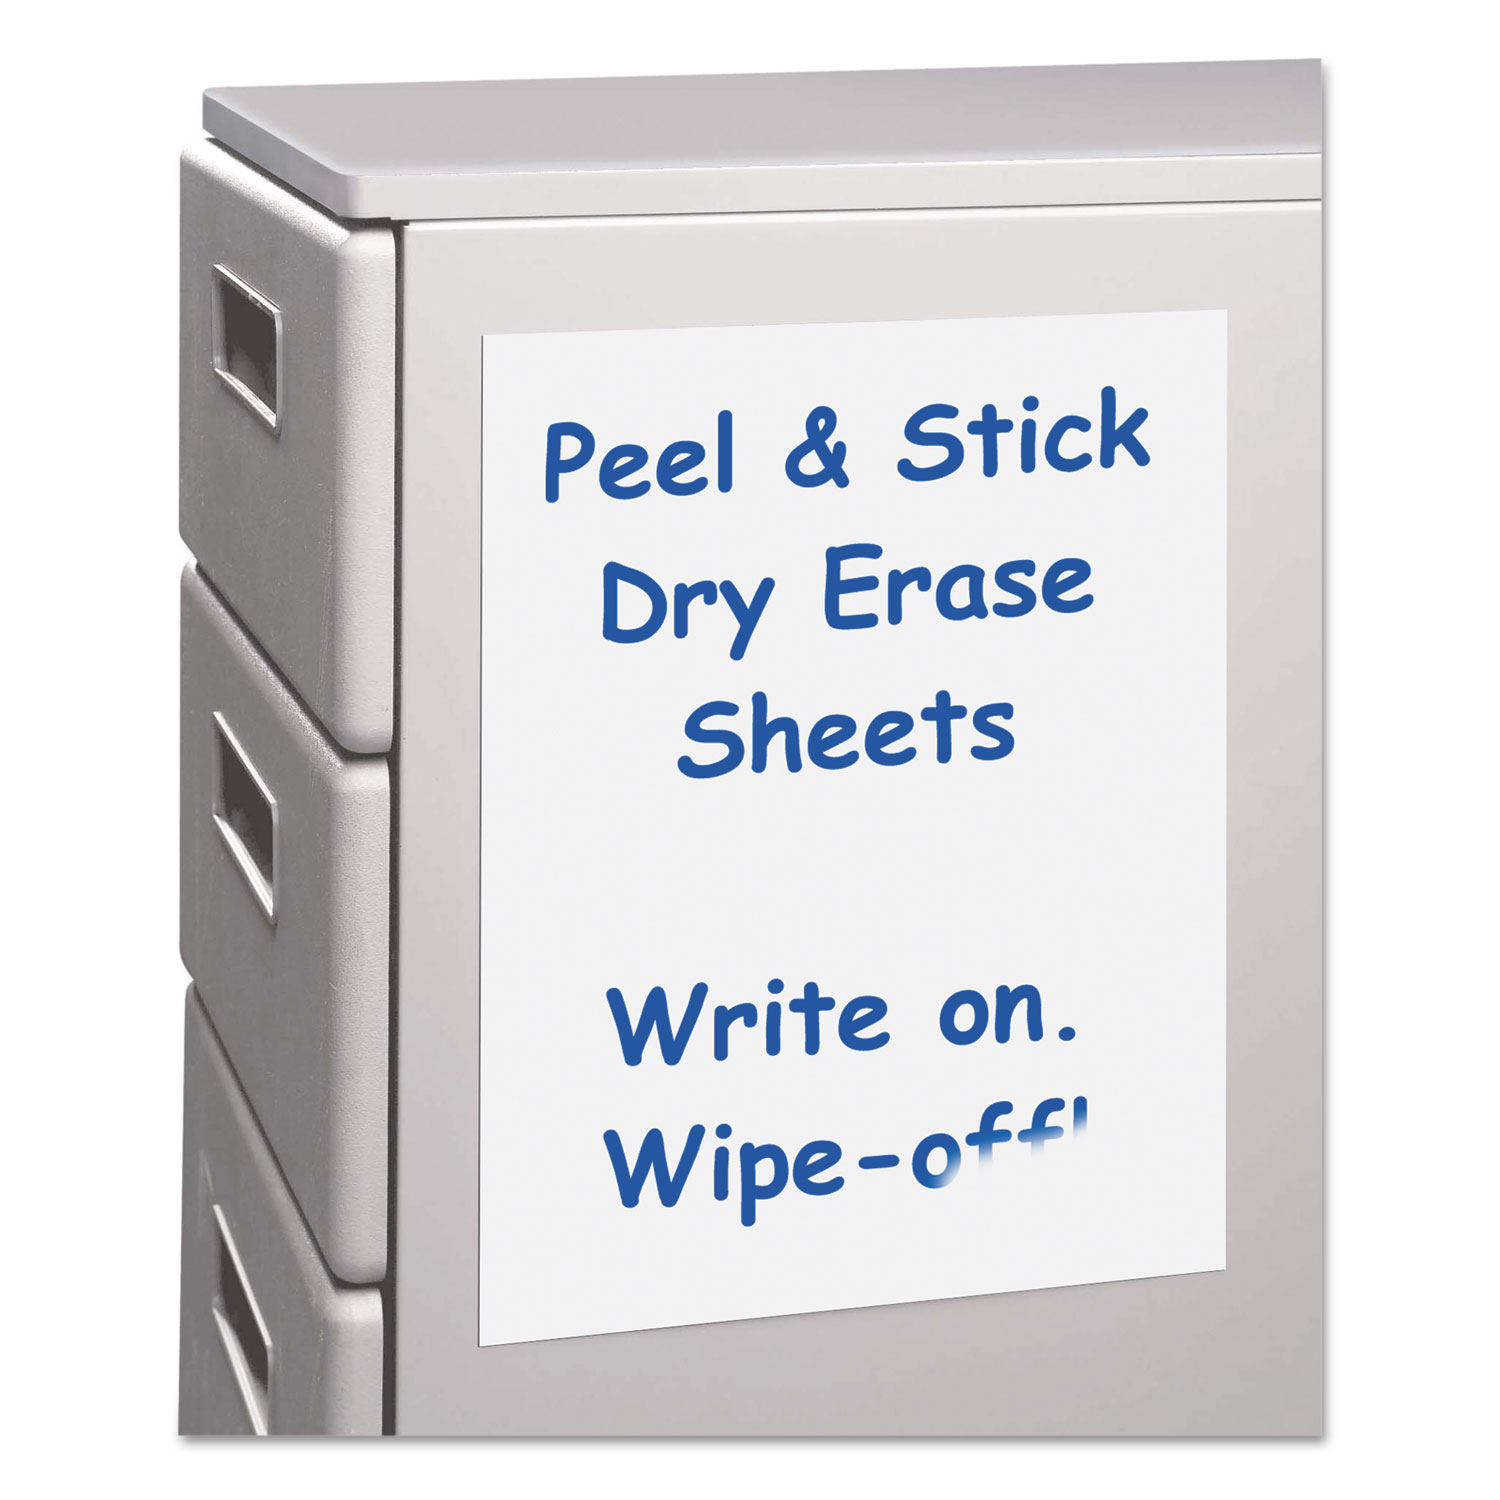  C-Line 57724 Peel and Stick Dry Erase Sheets, 17 x 24, White, 15 Sheets/Box (CLI57724) 